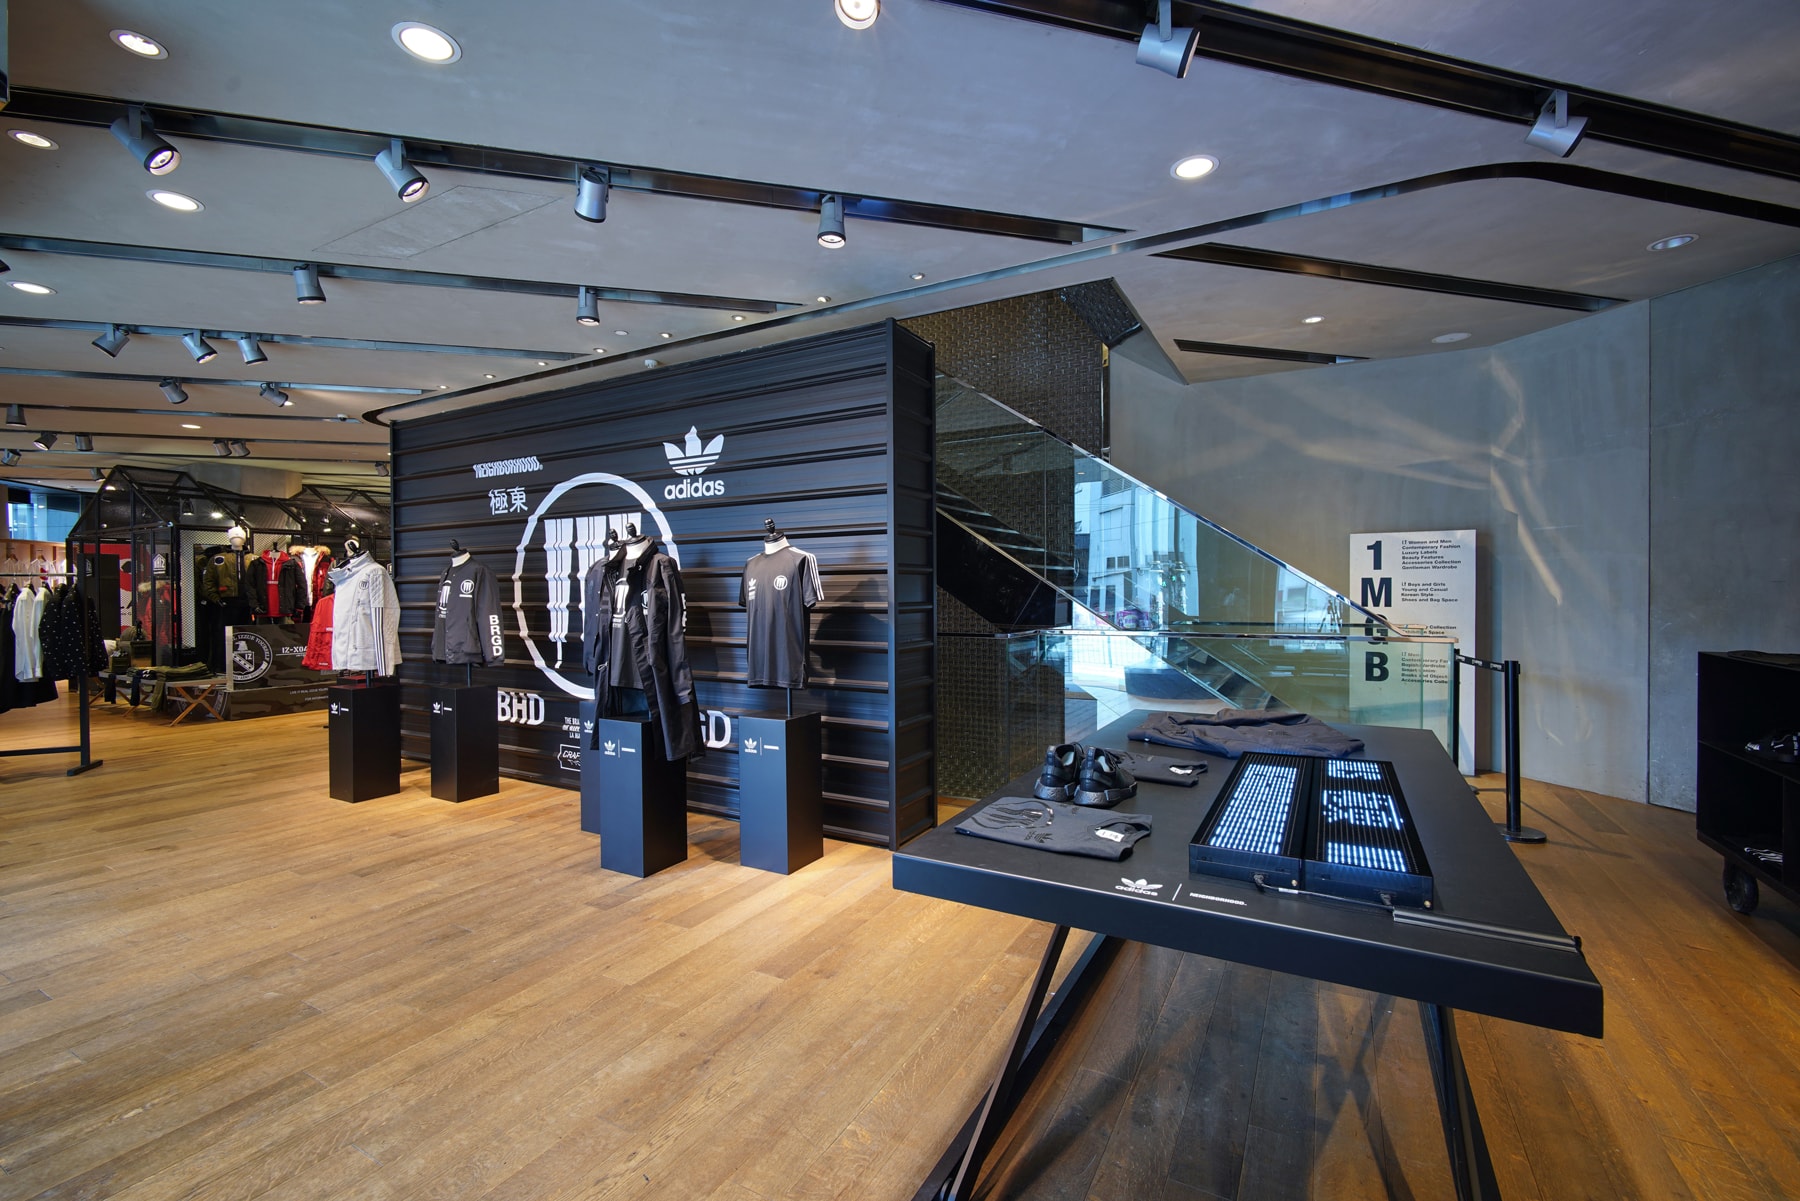 adidas Originals NEIGHBORHOOD Pop-Up Store Jackets NMDs Hong Kong spring summer 2018